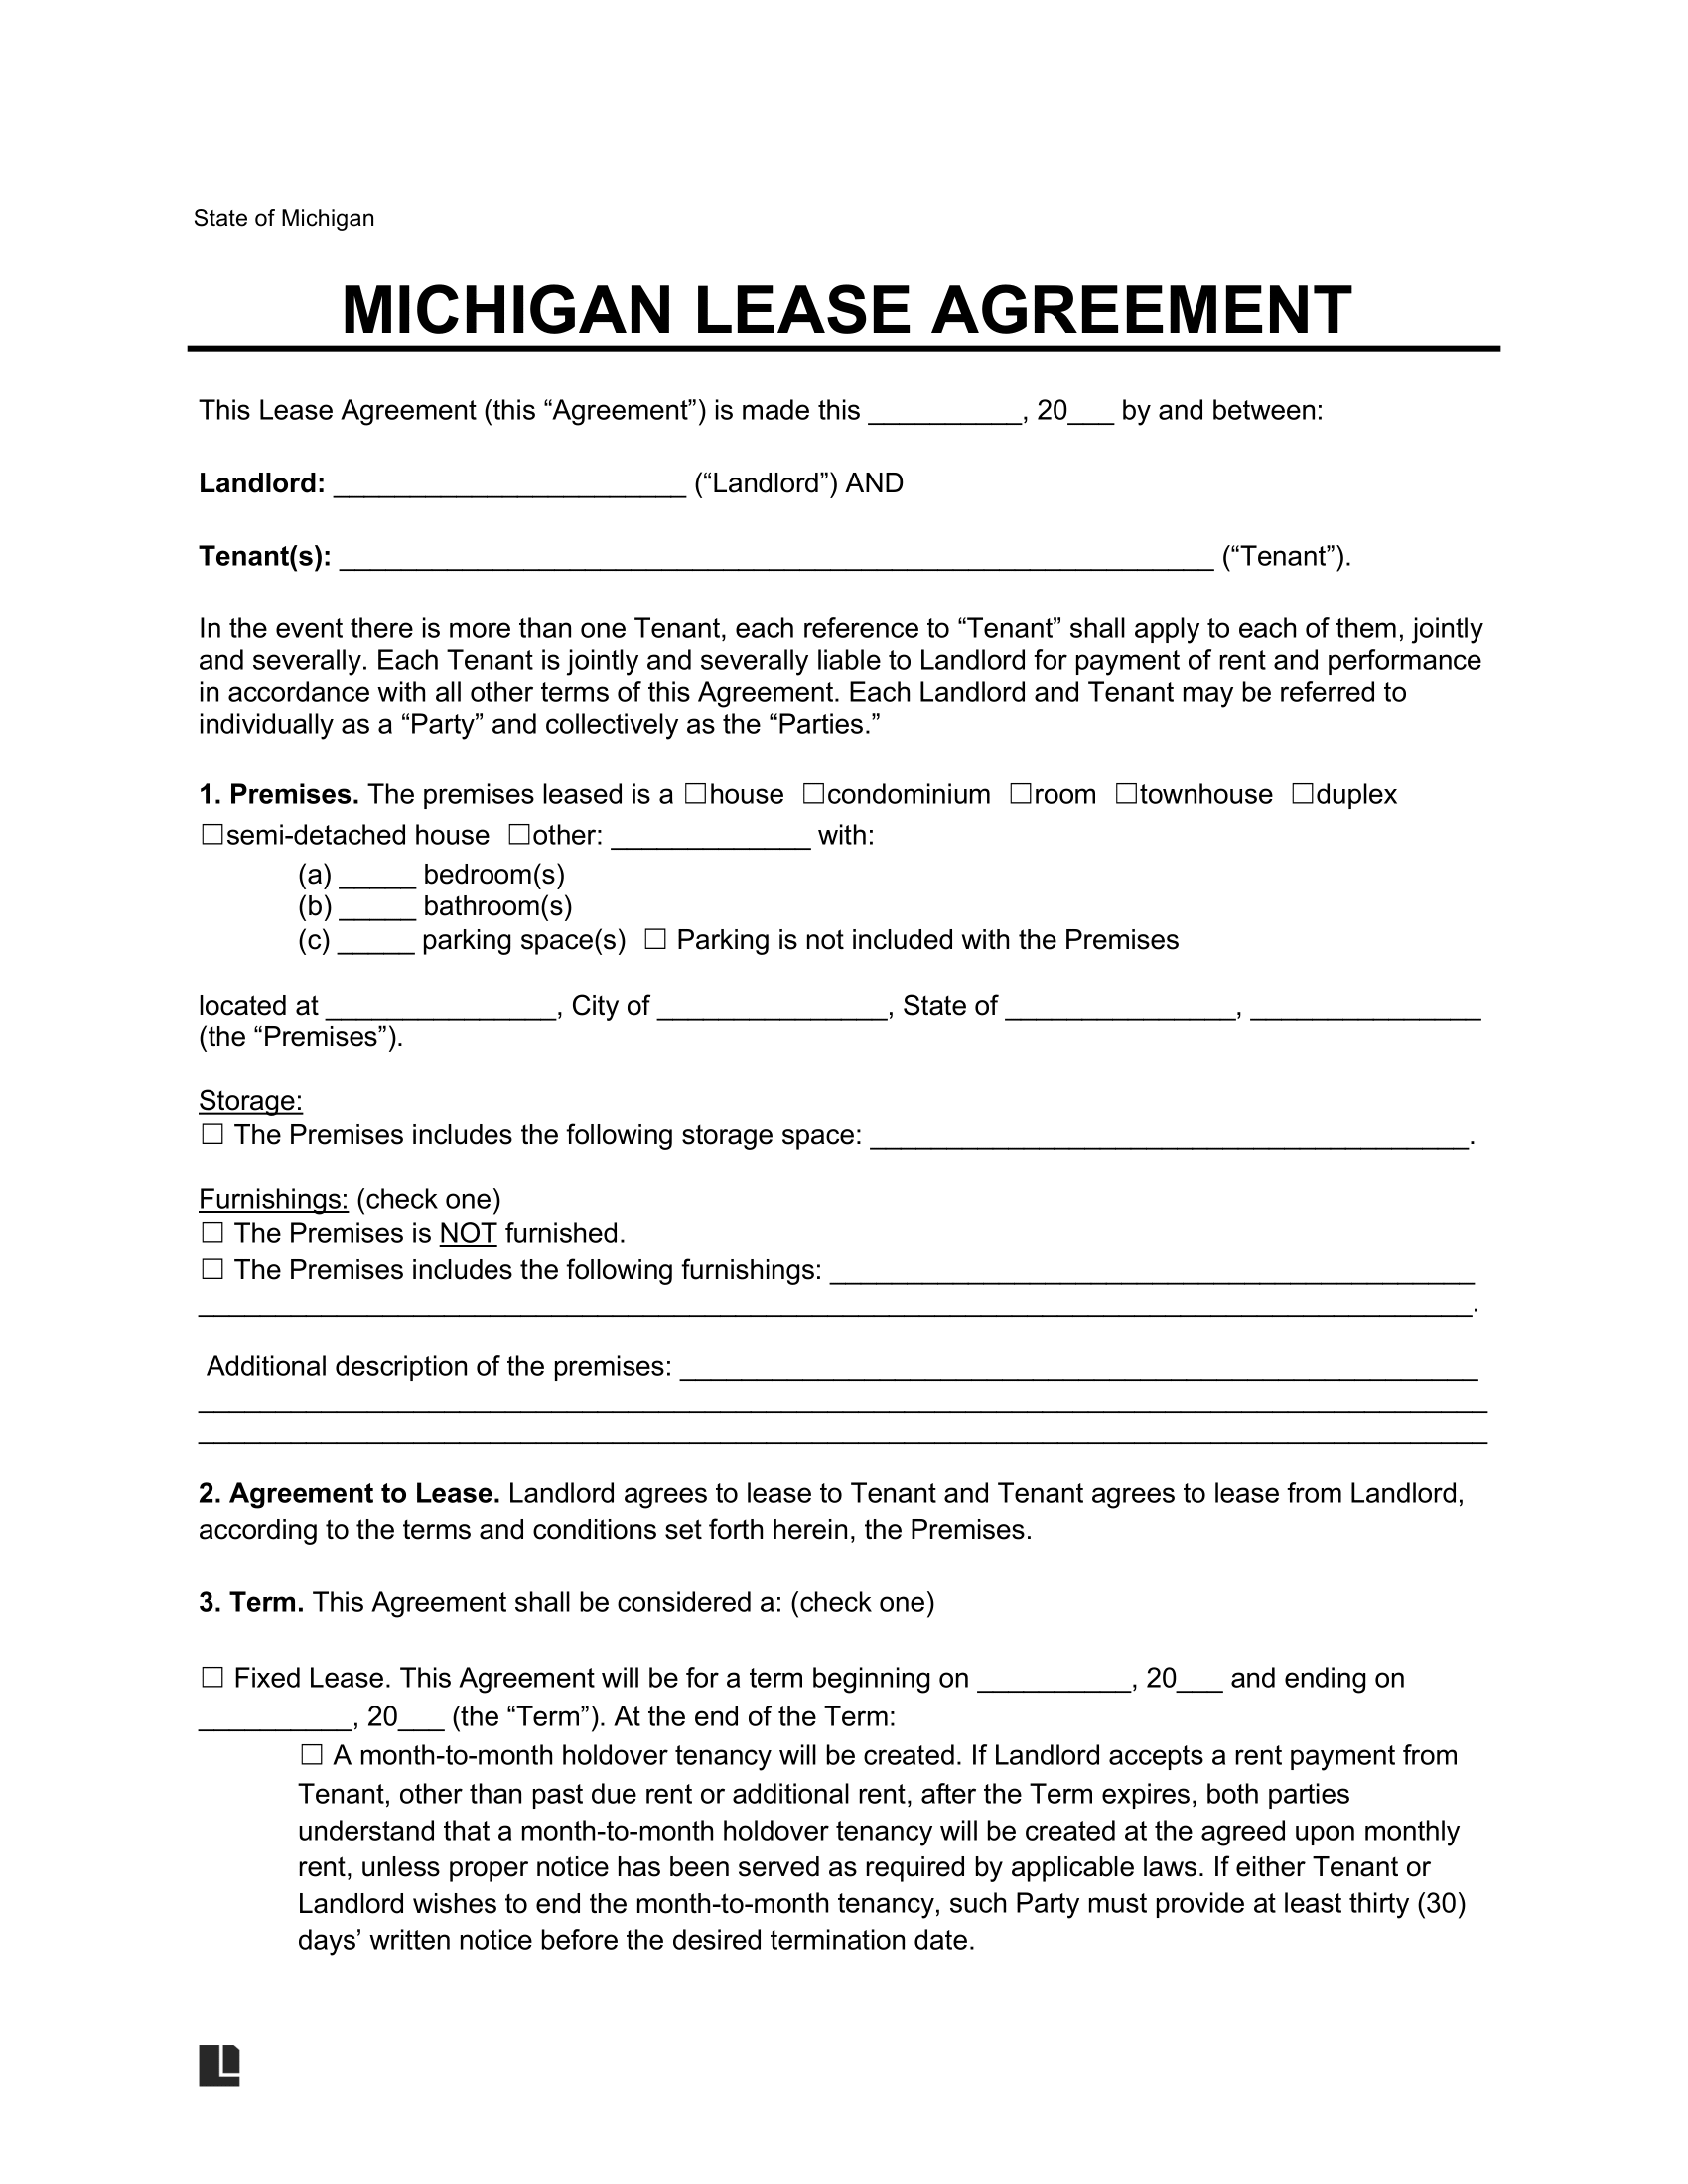 michigan lease agreement